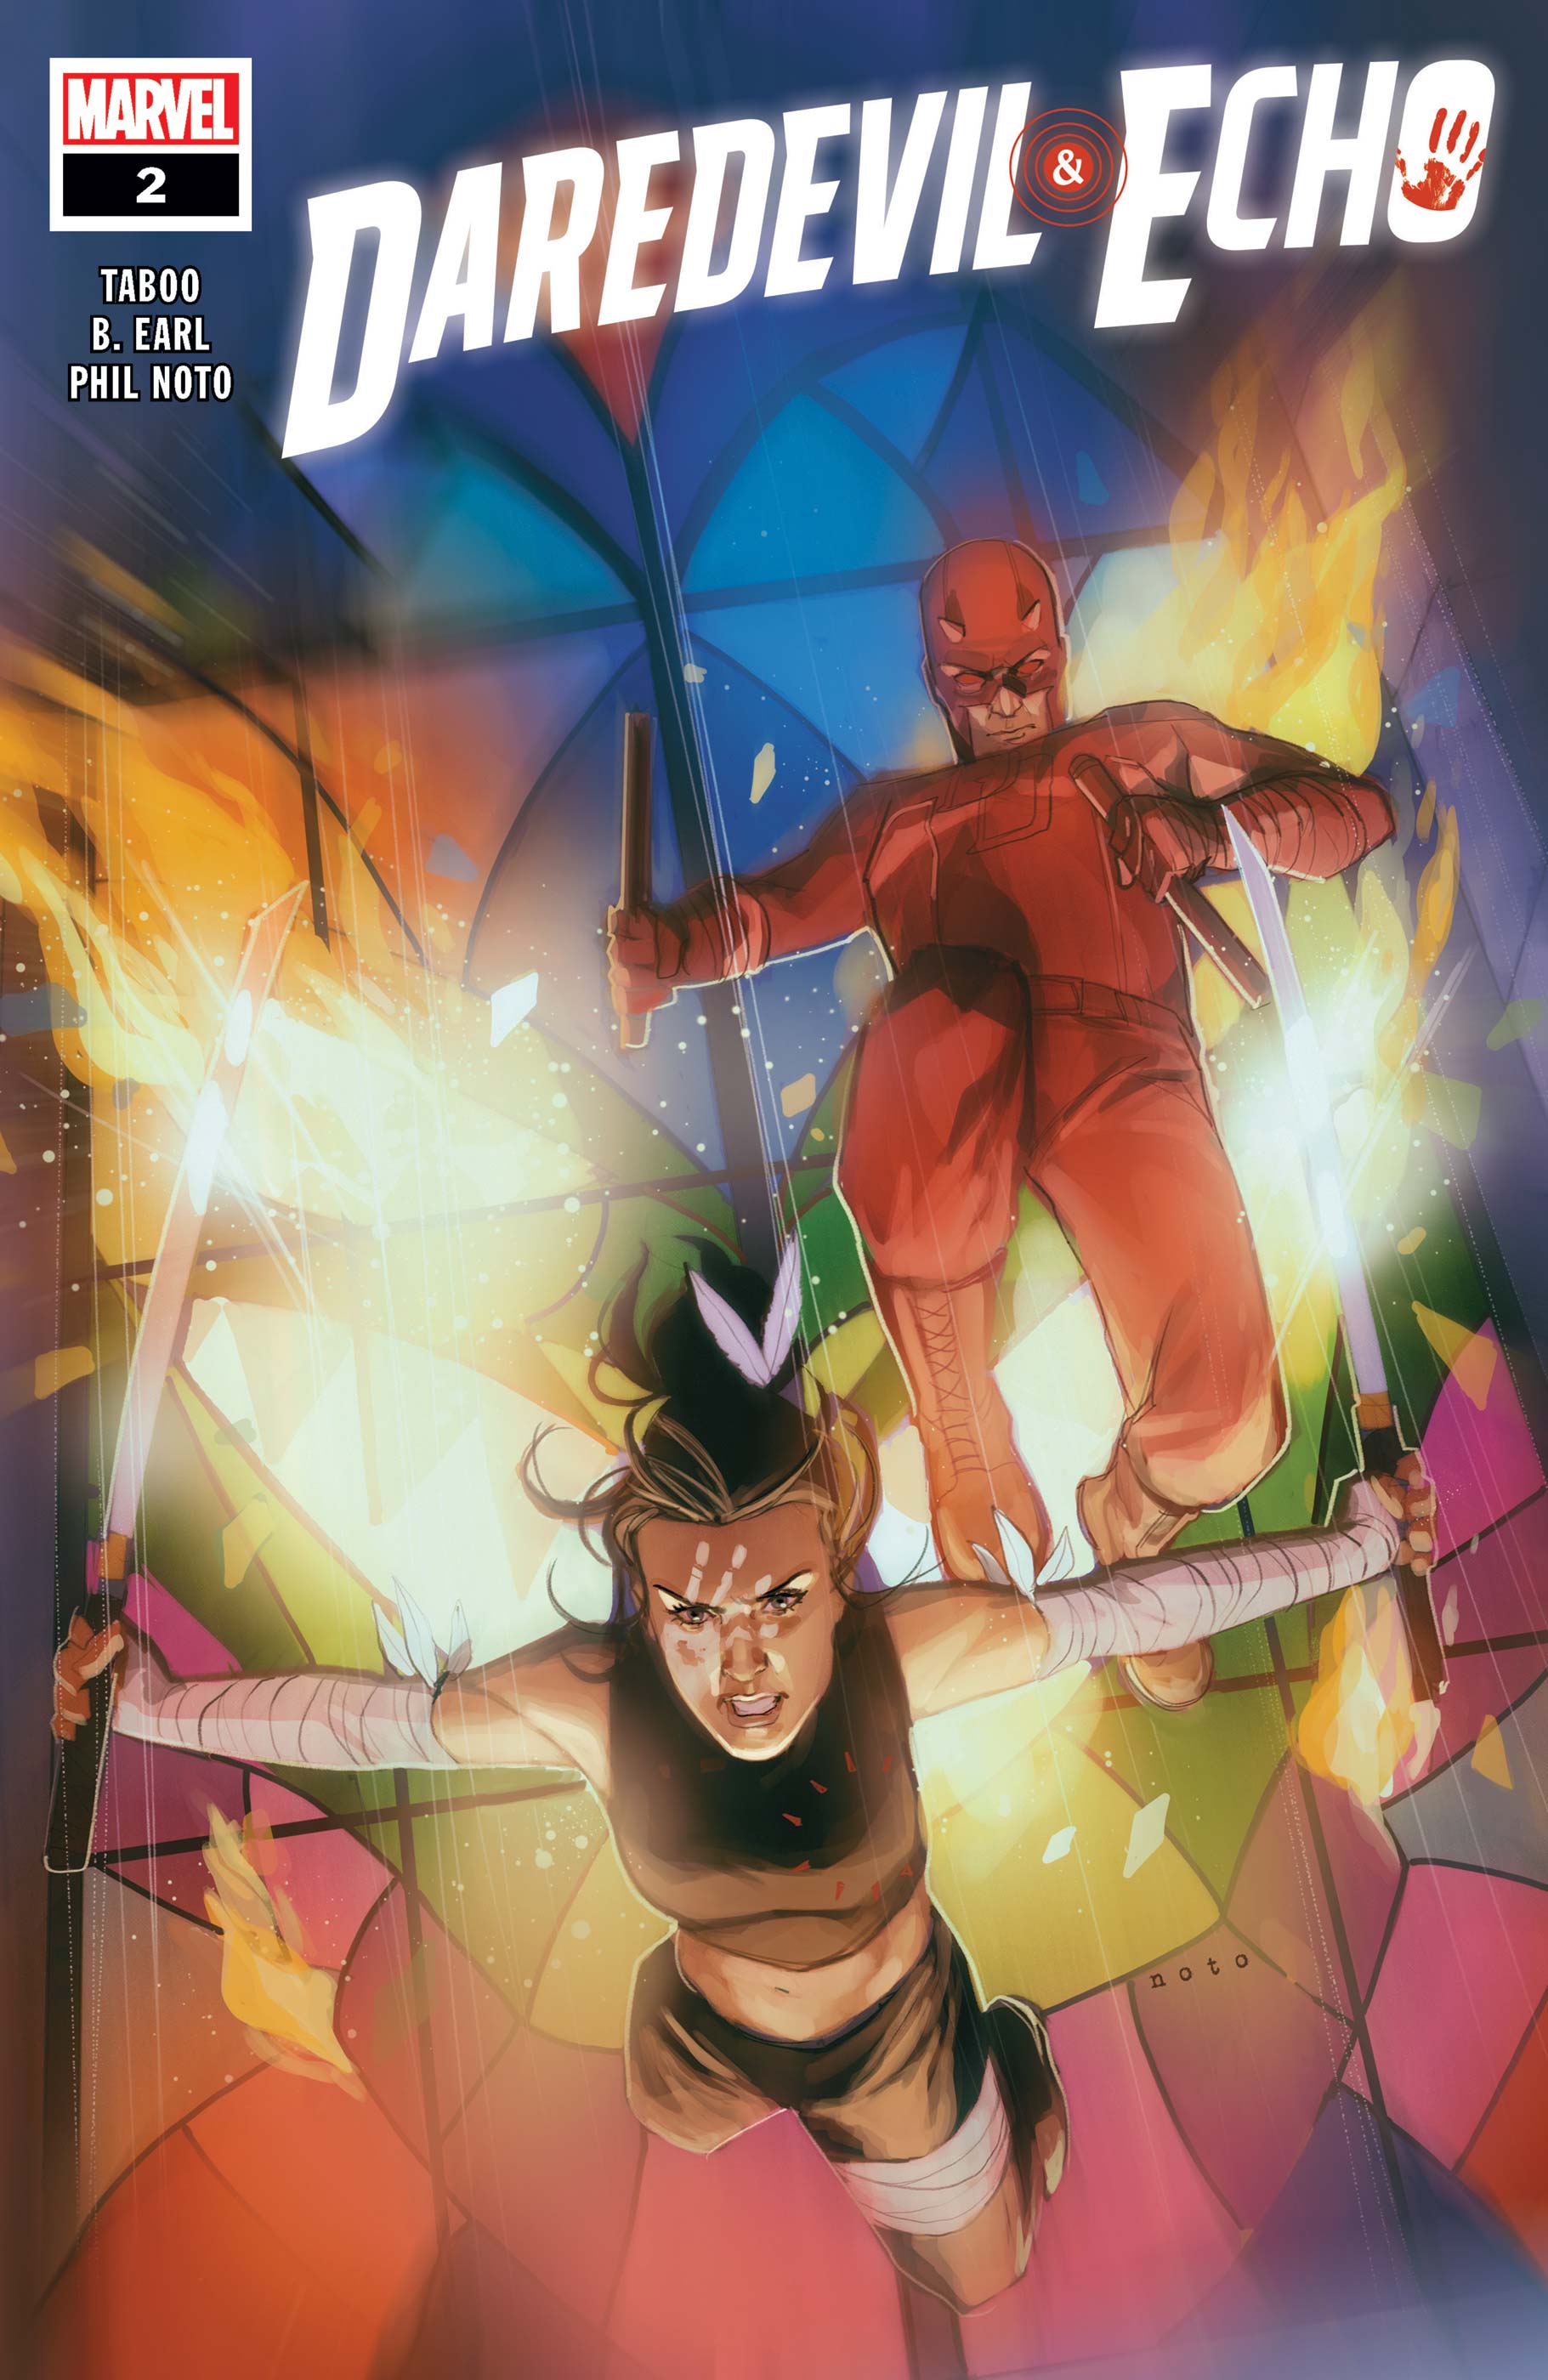 Daredevil & Echo (2023) #2